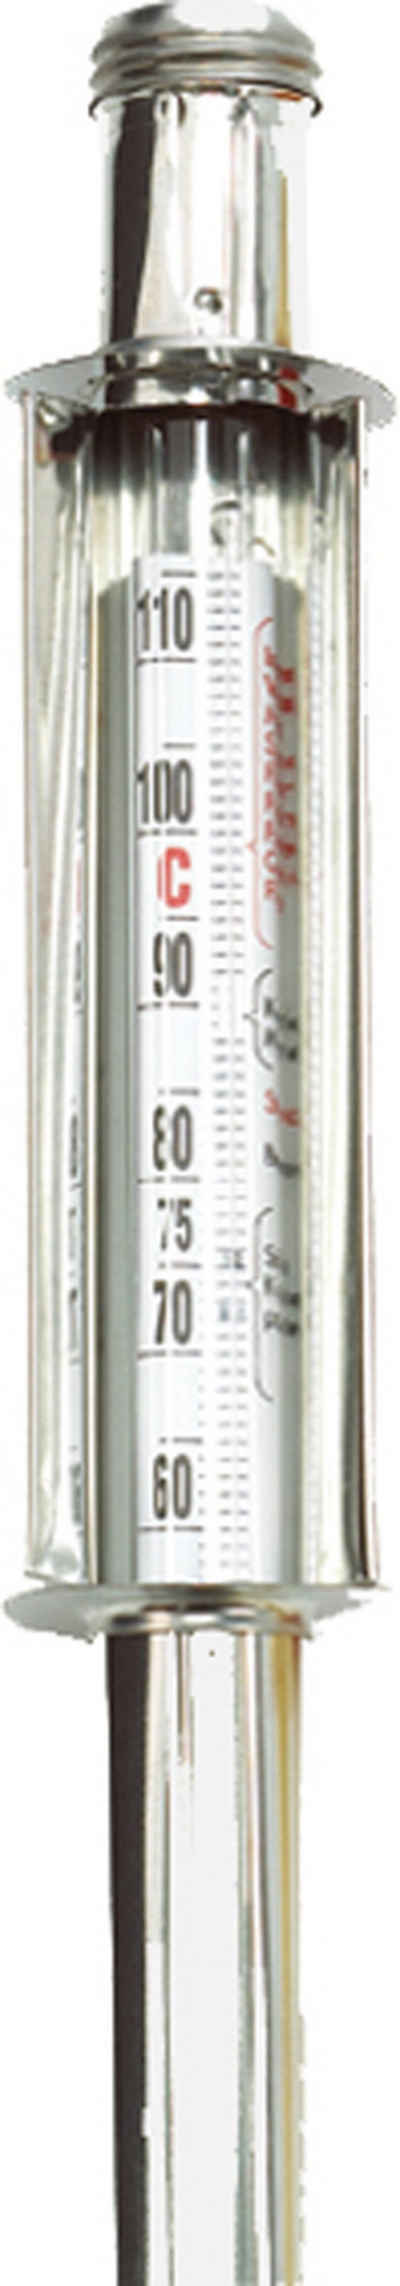 Weck Kochthermometer »Einkochthermometer Koch Thermometer«